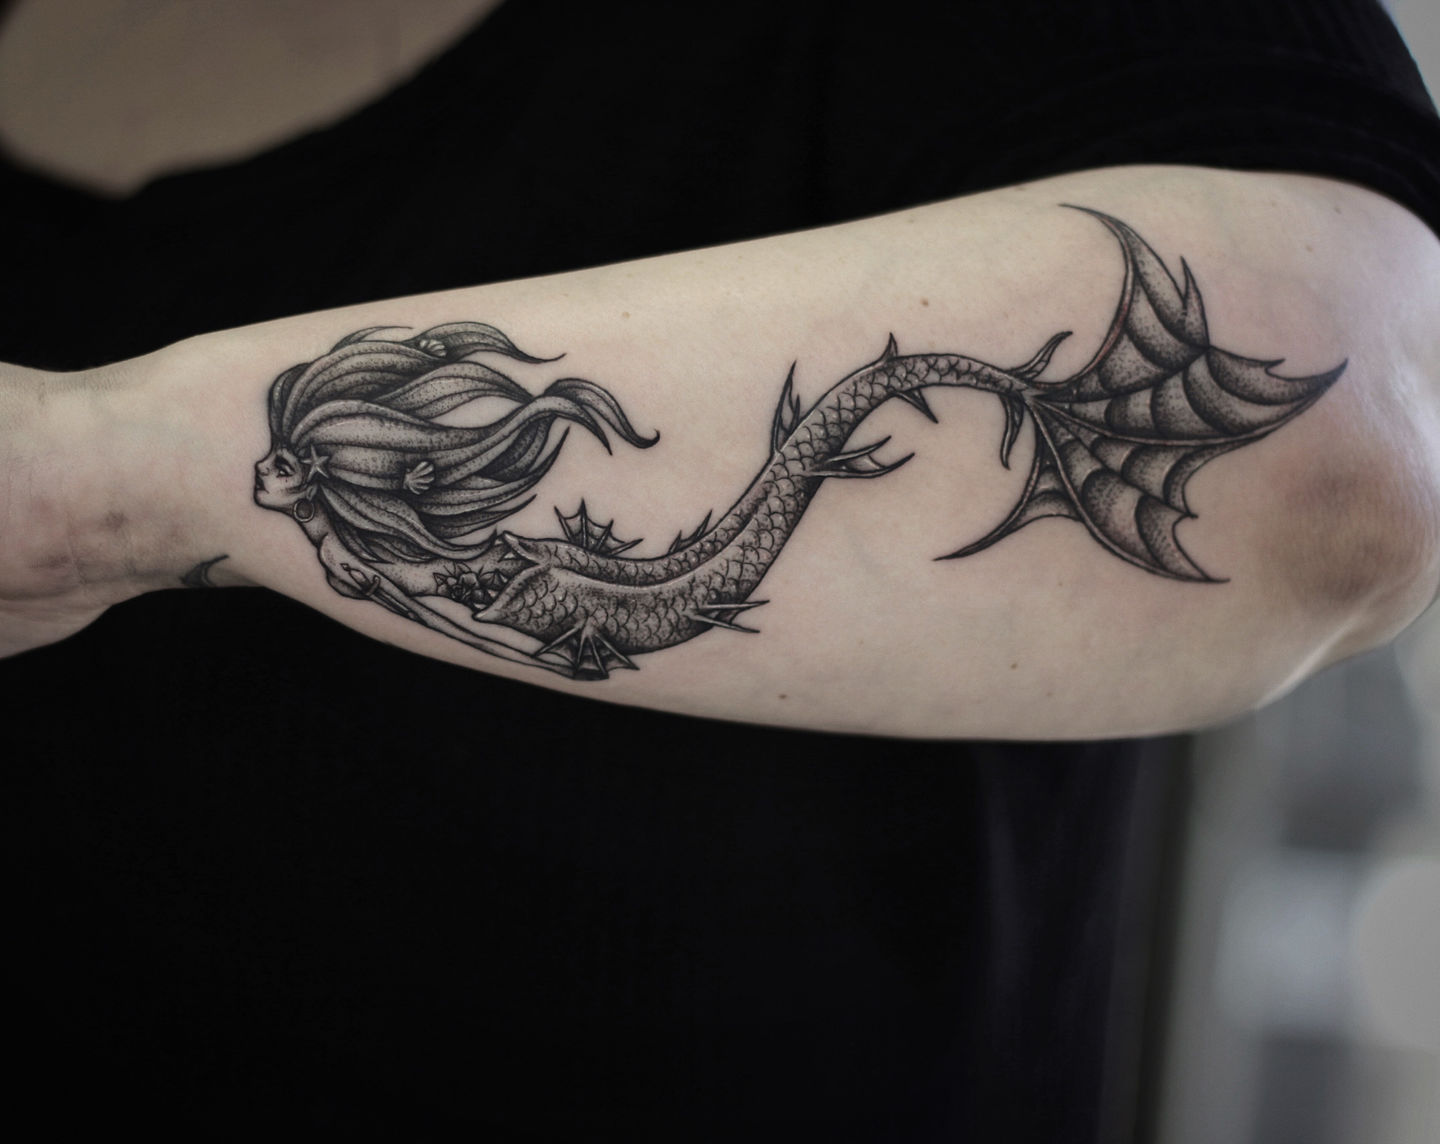 My Mermaid Tattoo by kyoMiyavi on DeviantArt